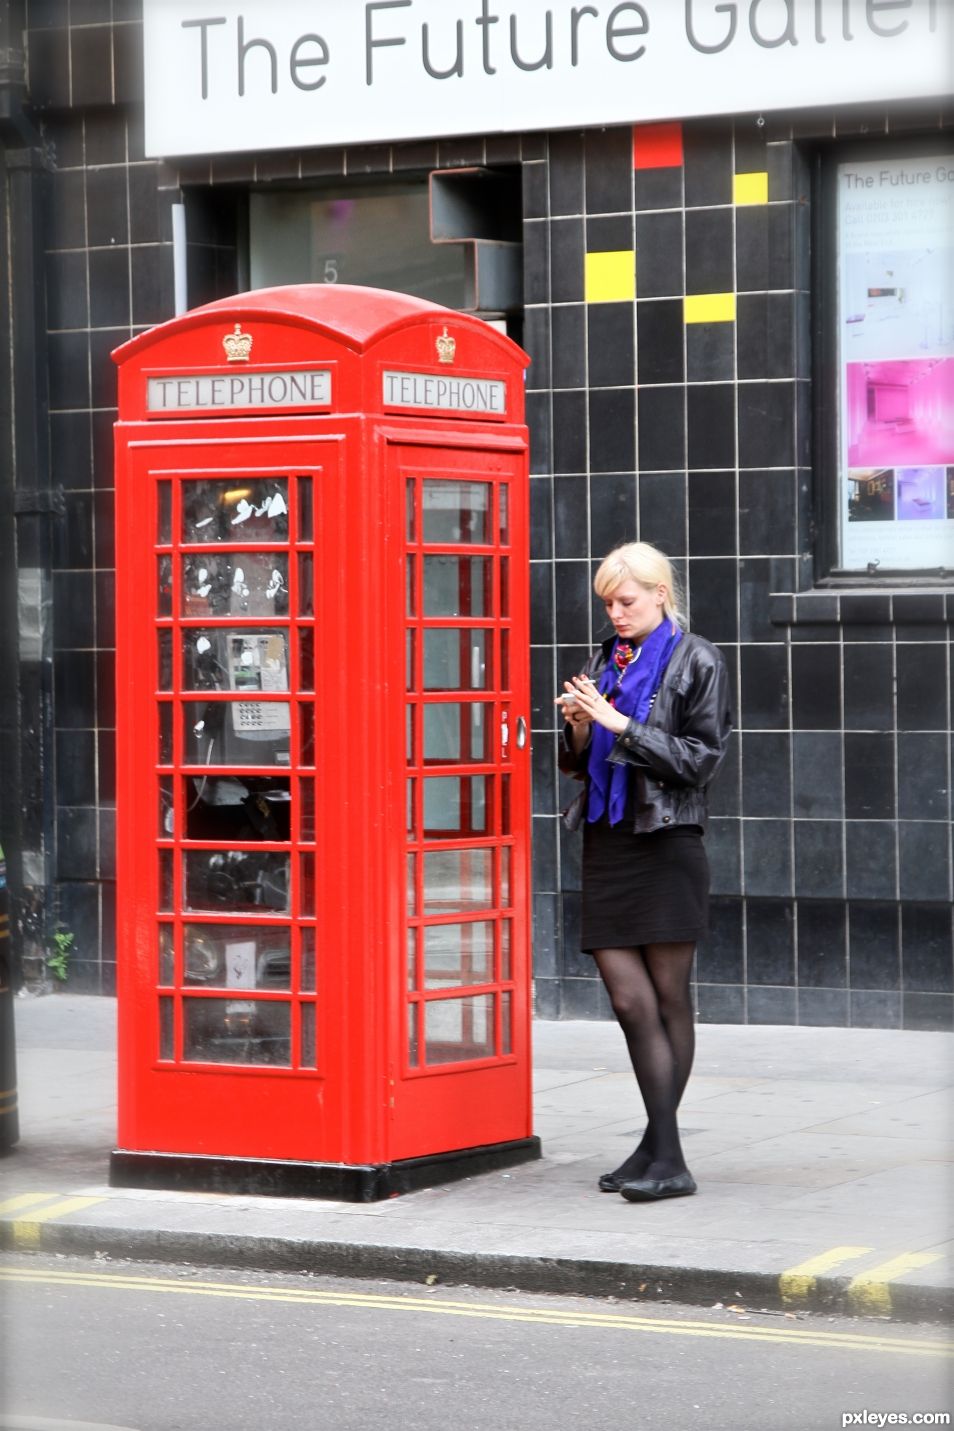 English Phone Booth